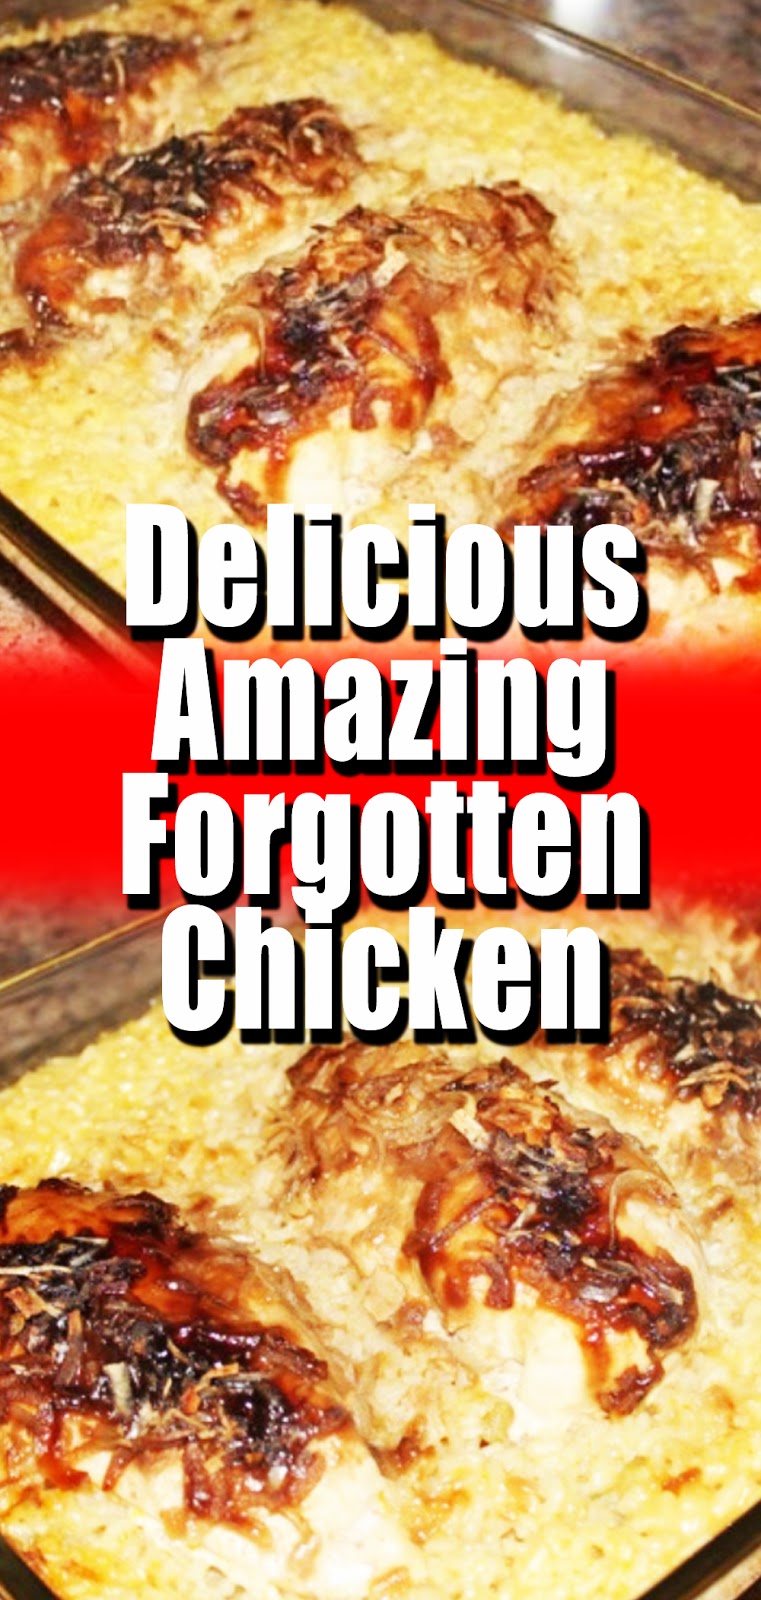 Delicious Amazing Forgotten Chicken - 3 SECONDS